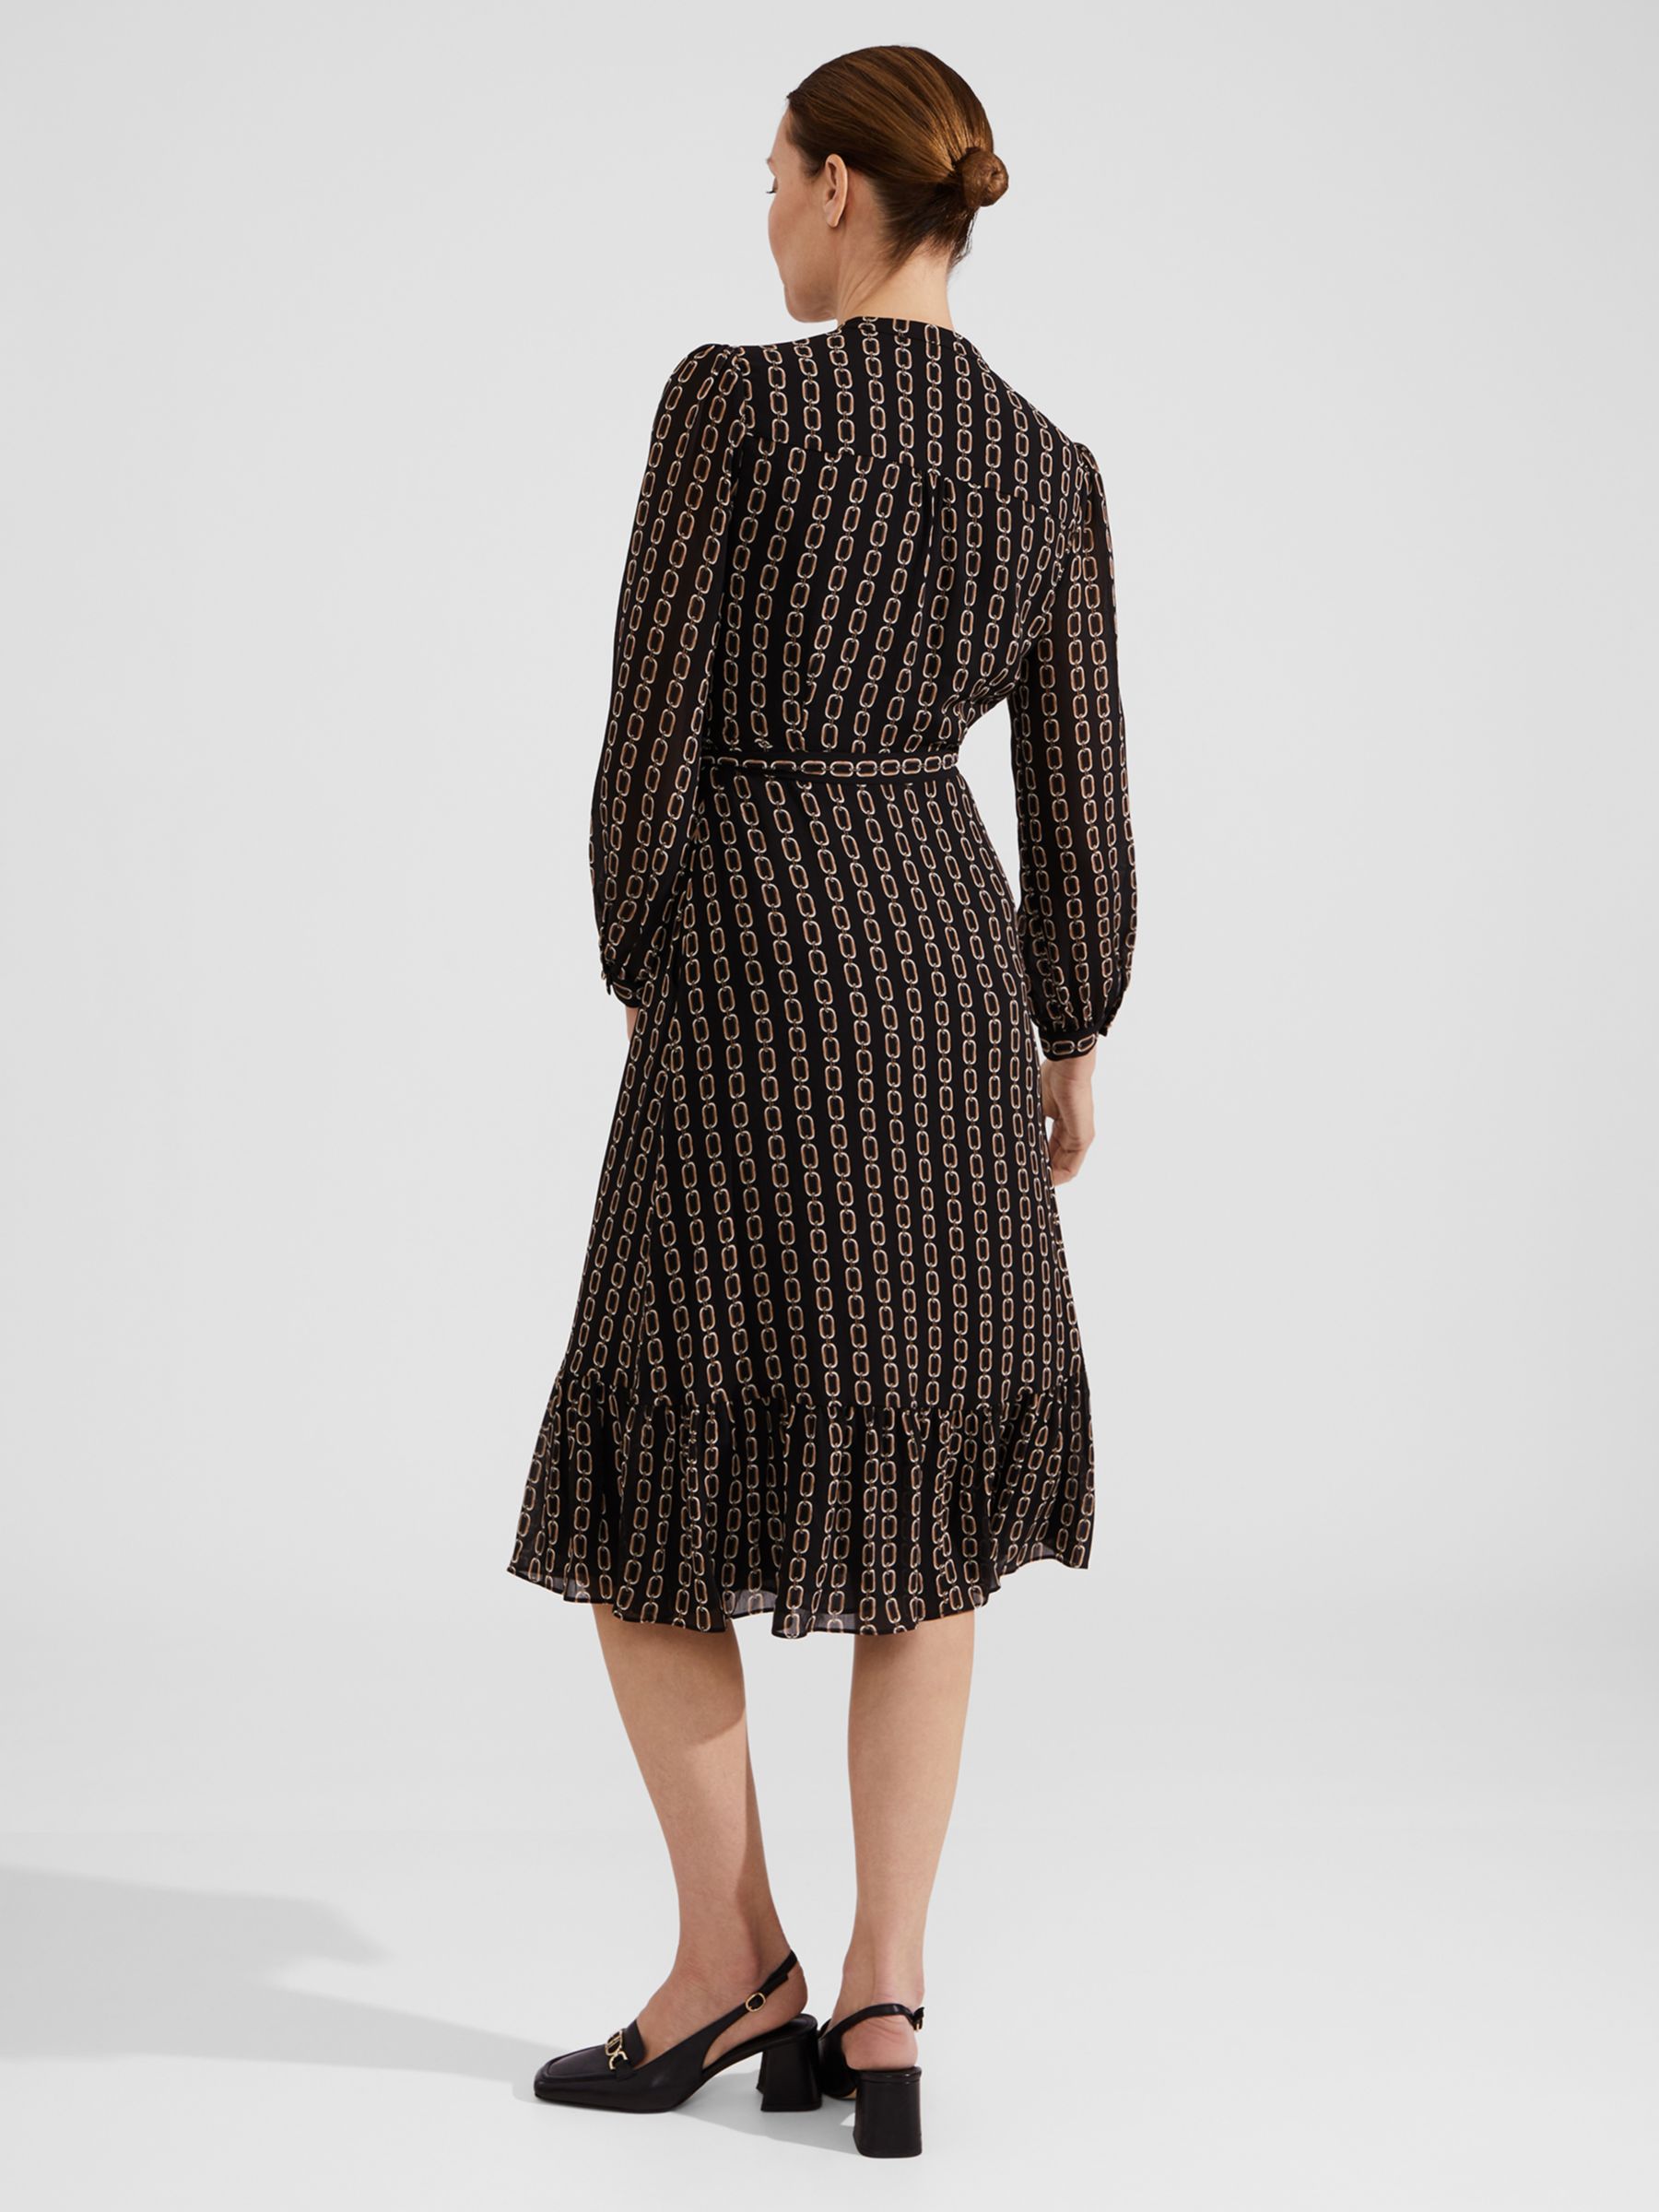 Hobbs Alexia Chain Print Dress, Black Camel at John Lewis & Partners